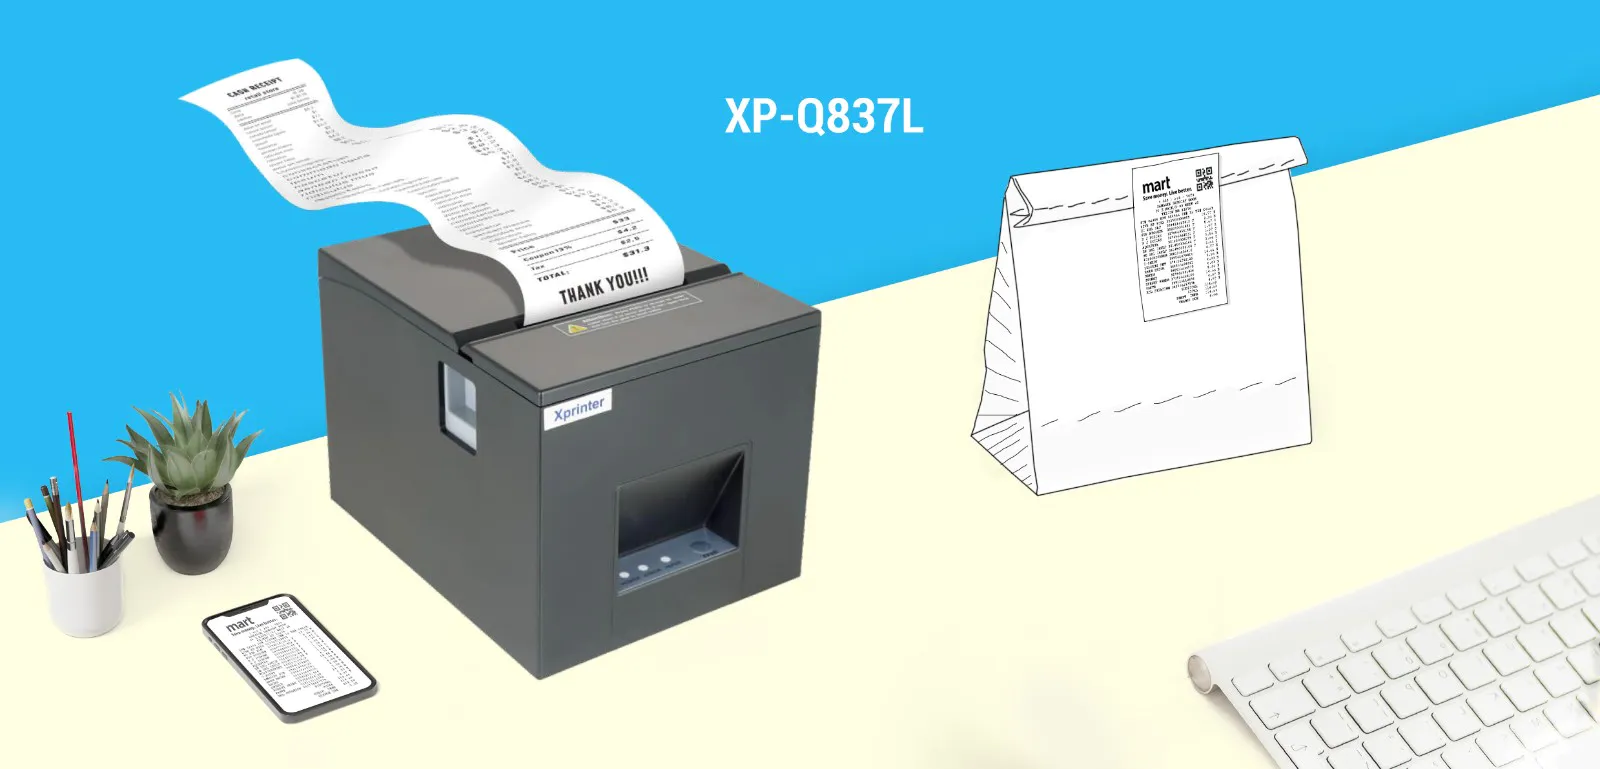 Xprinter multilingual pos receipt printer factory for shop